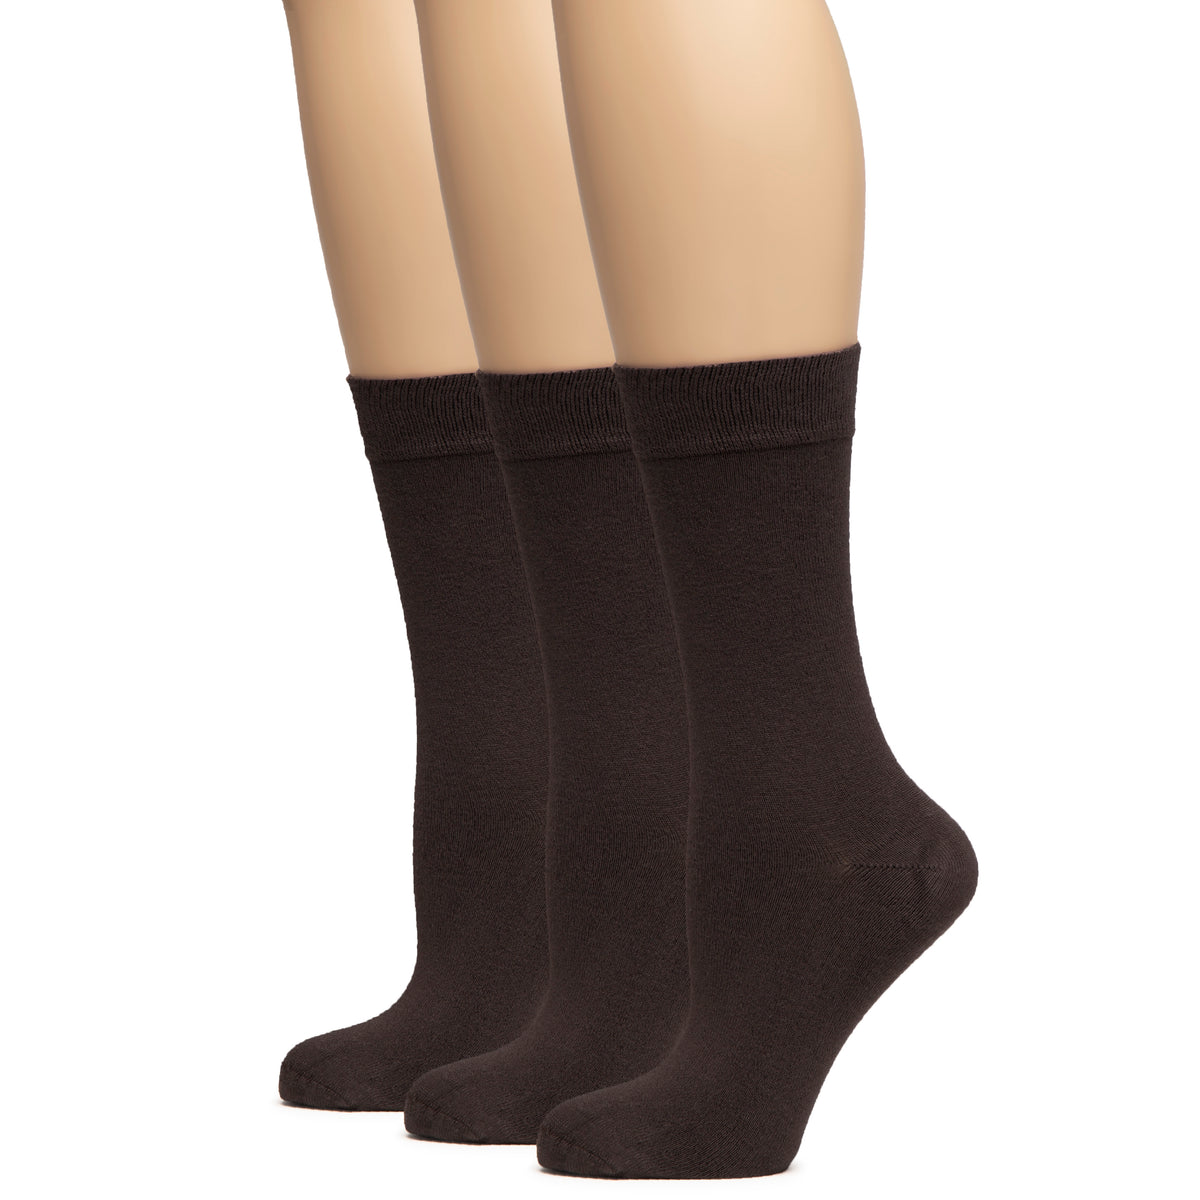 Hugh Ugoli Women's Bamboo Dress Socks Crew Soft Comfy Seamless Toe, 3 Pairs, Shoe Size: 5-8/9-11 | Shoe Size: 9-11 | Dark Brown